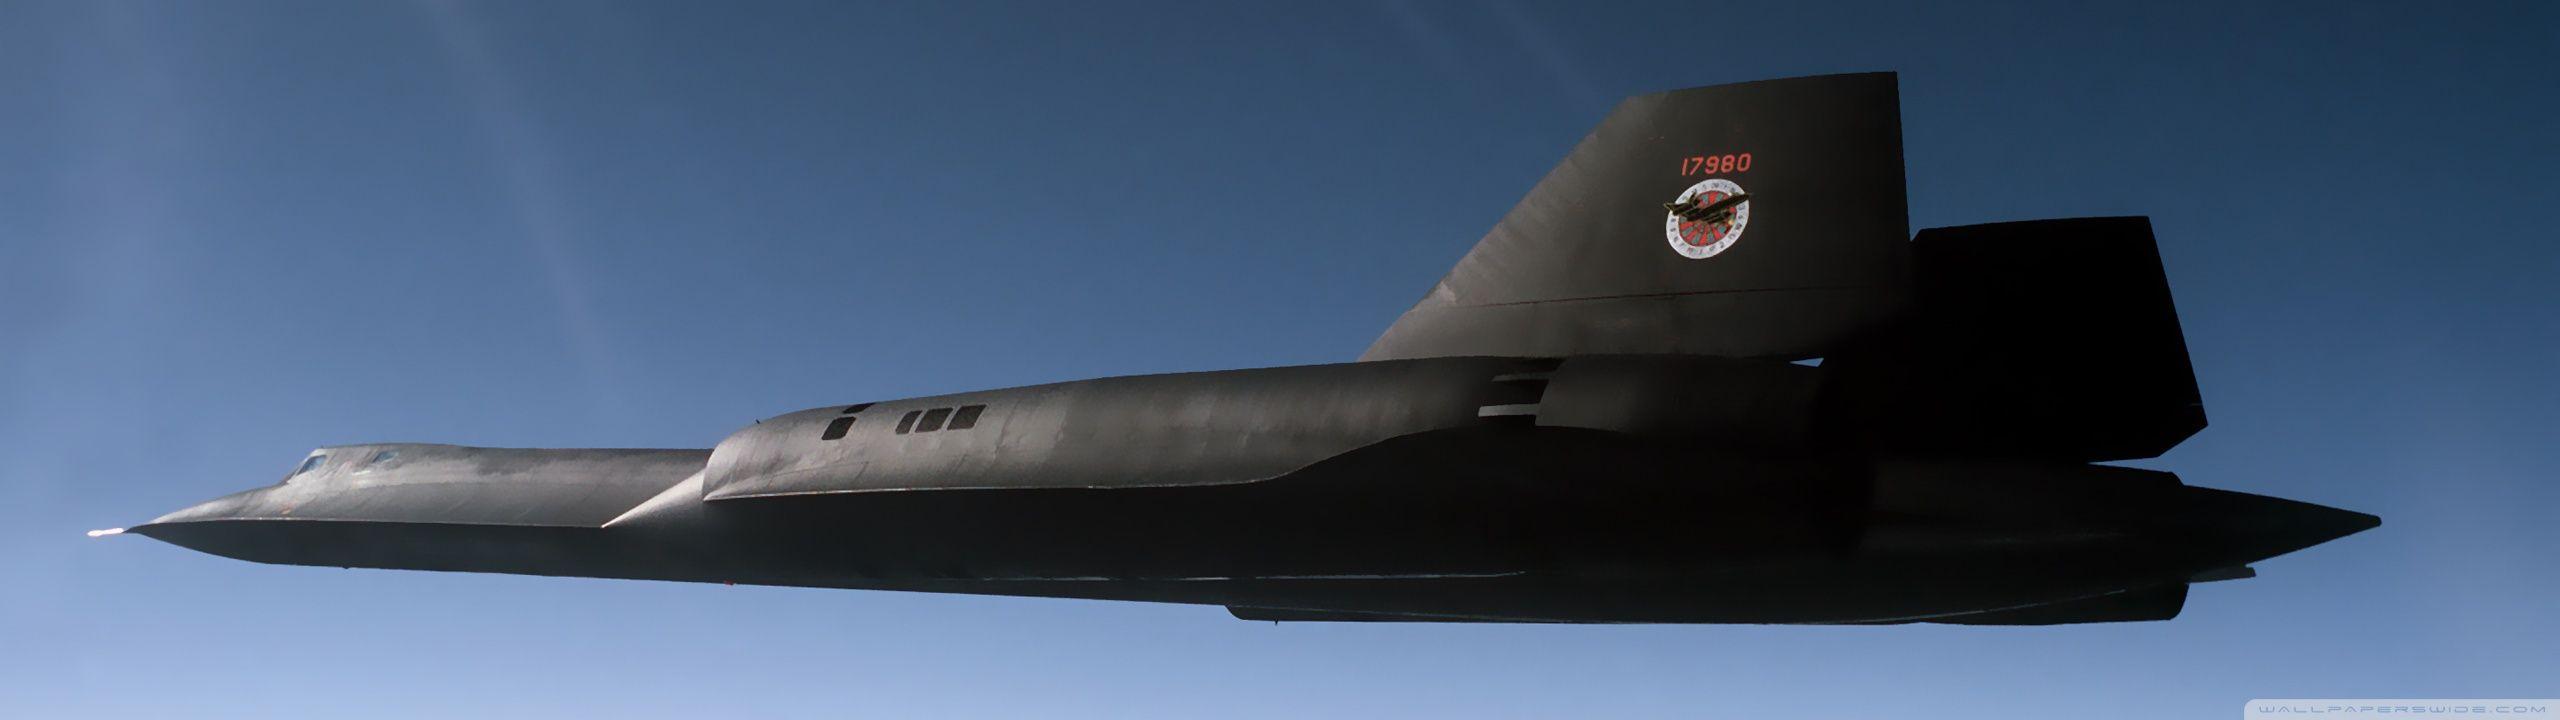 Lockheed SR 71 Blackbird HD desktop wallpaper, High Definition